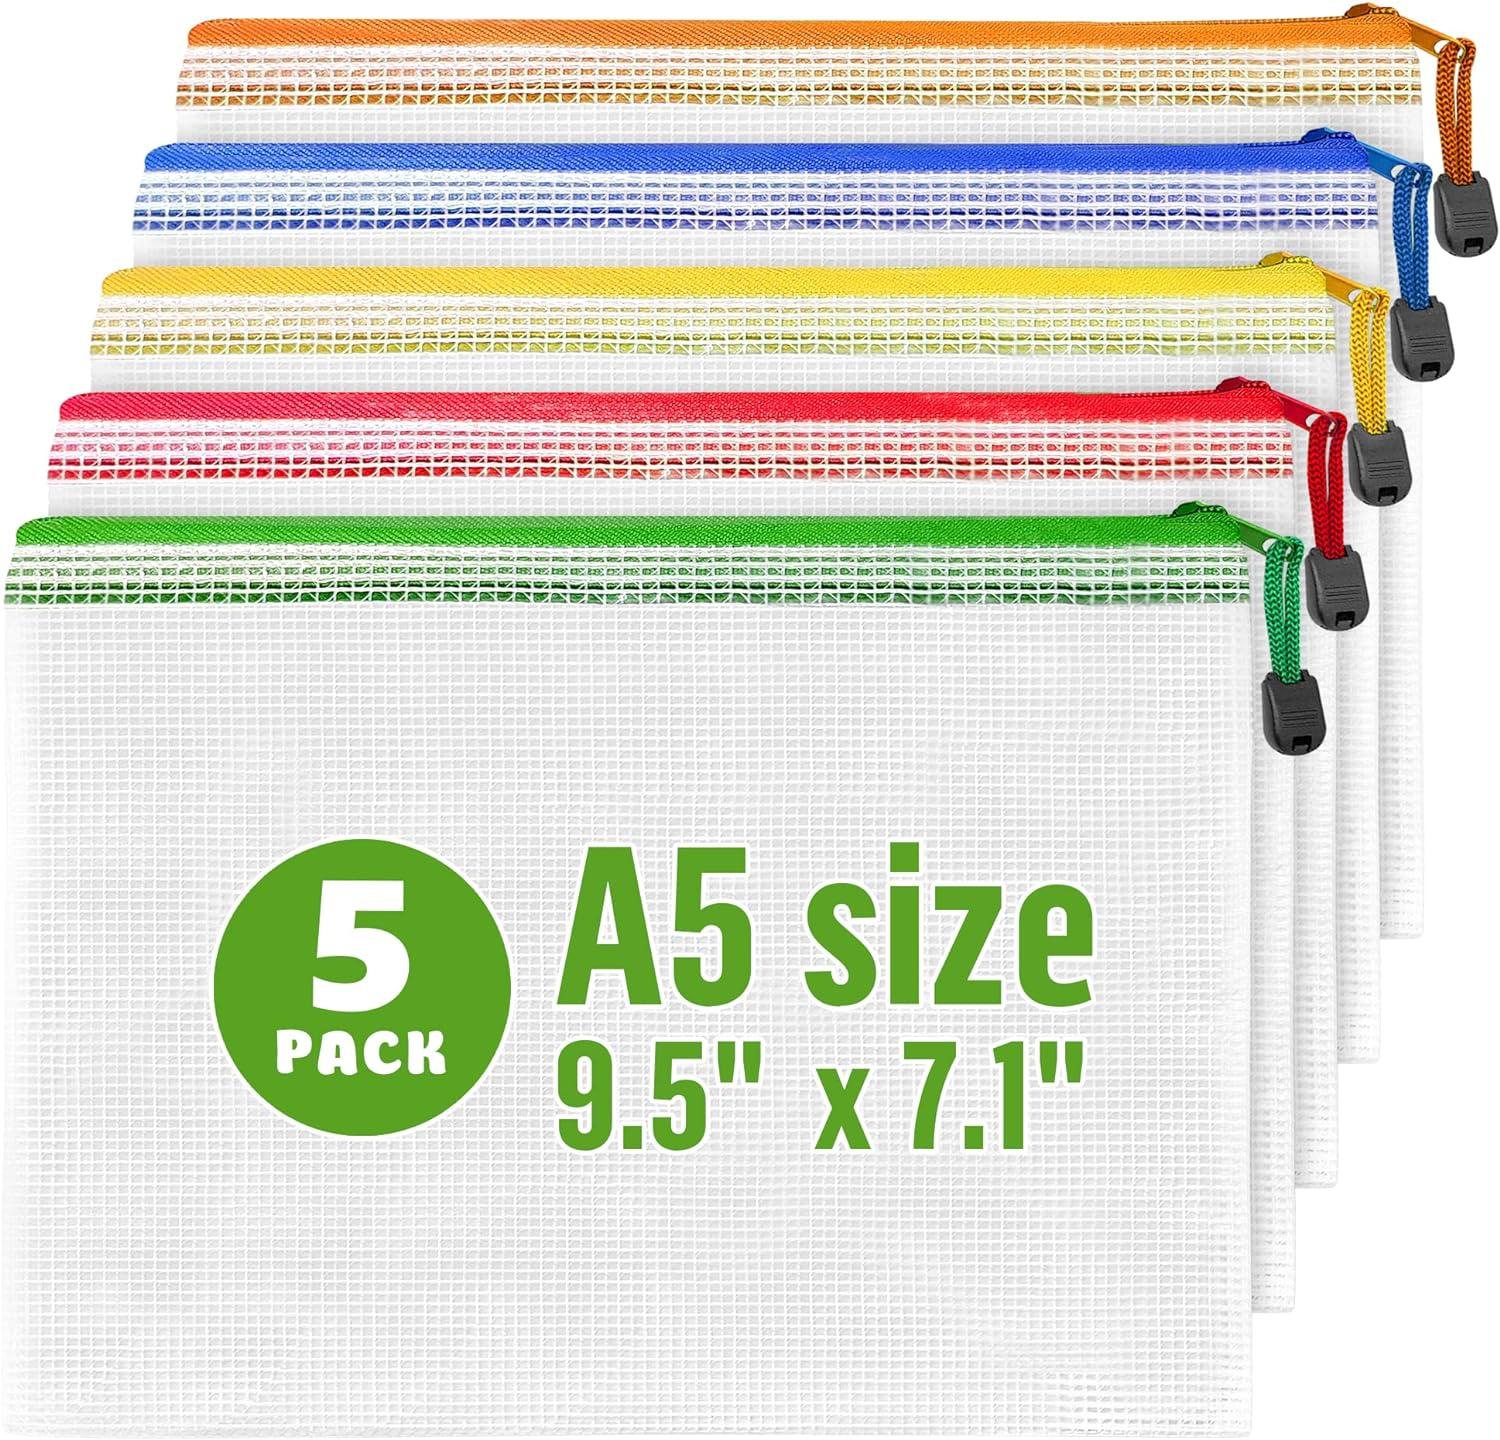 mesh zipper pouch bags a5-5 pack plastic zipper pouches for organizing 9 5x7 1 - mesh pouch with zipper bags